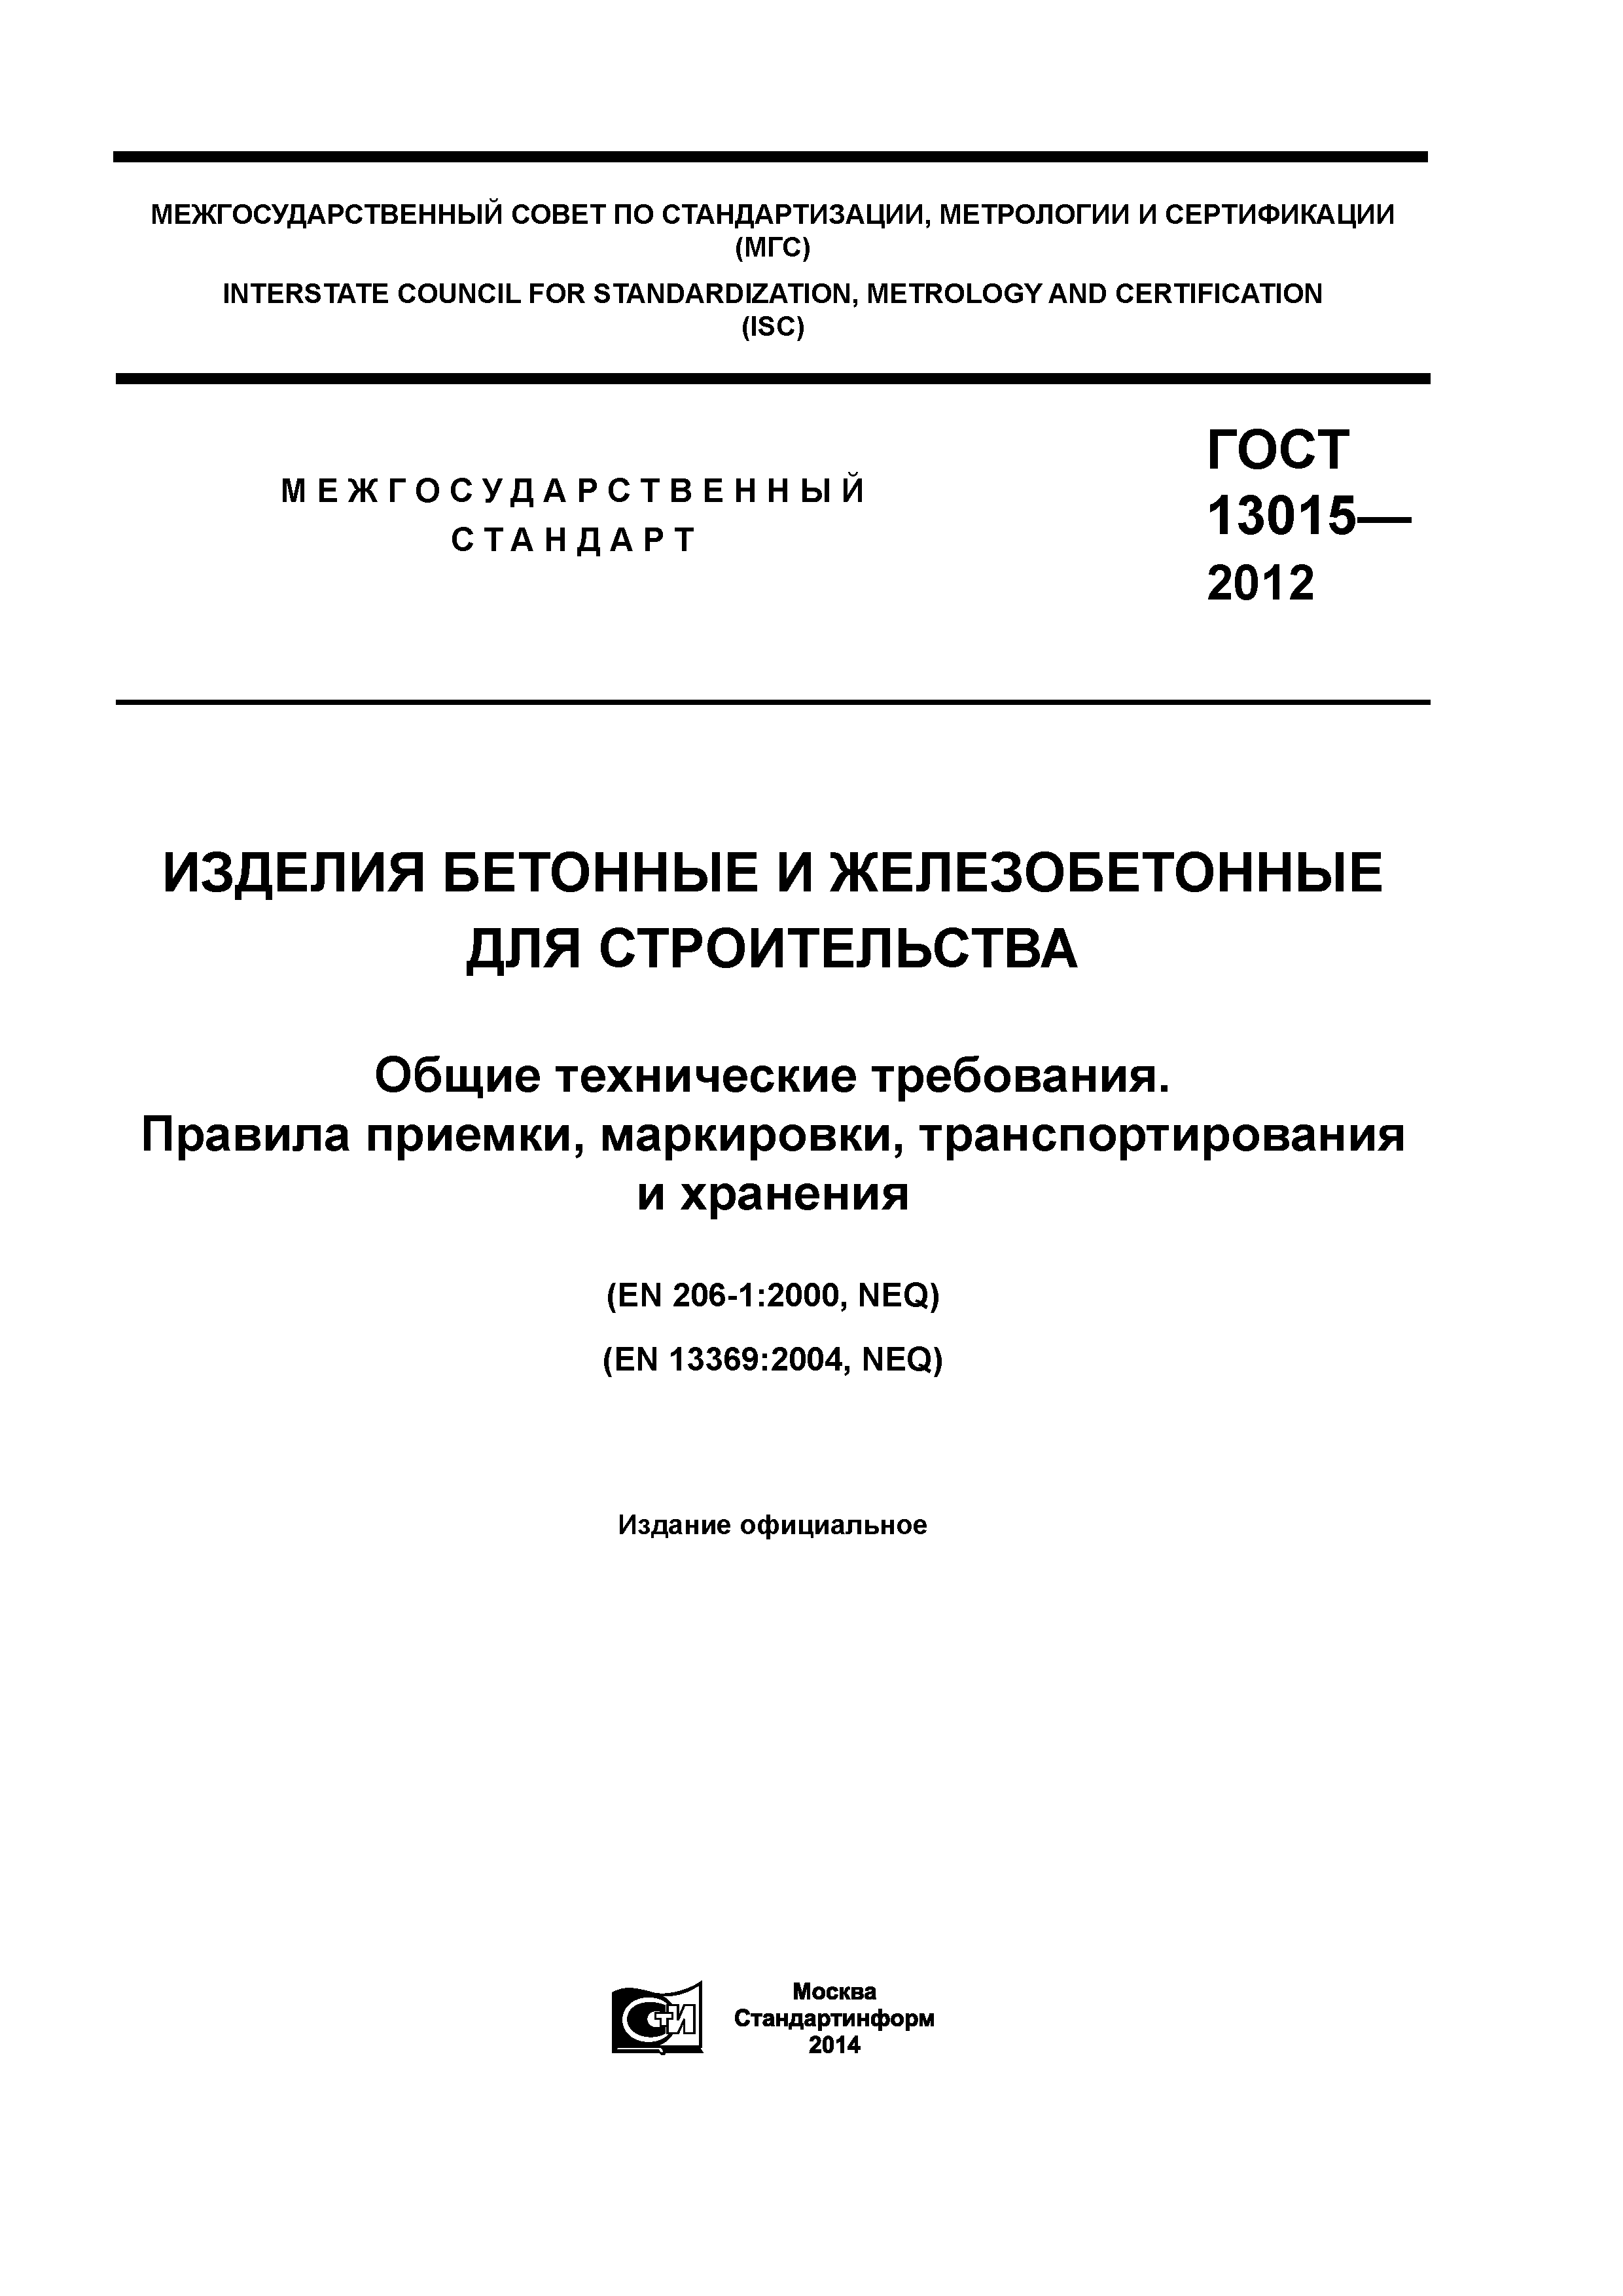 ГОСТ 13015-2012